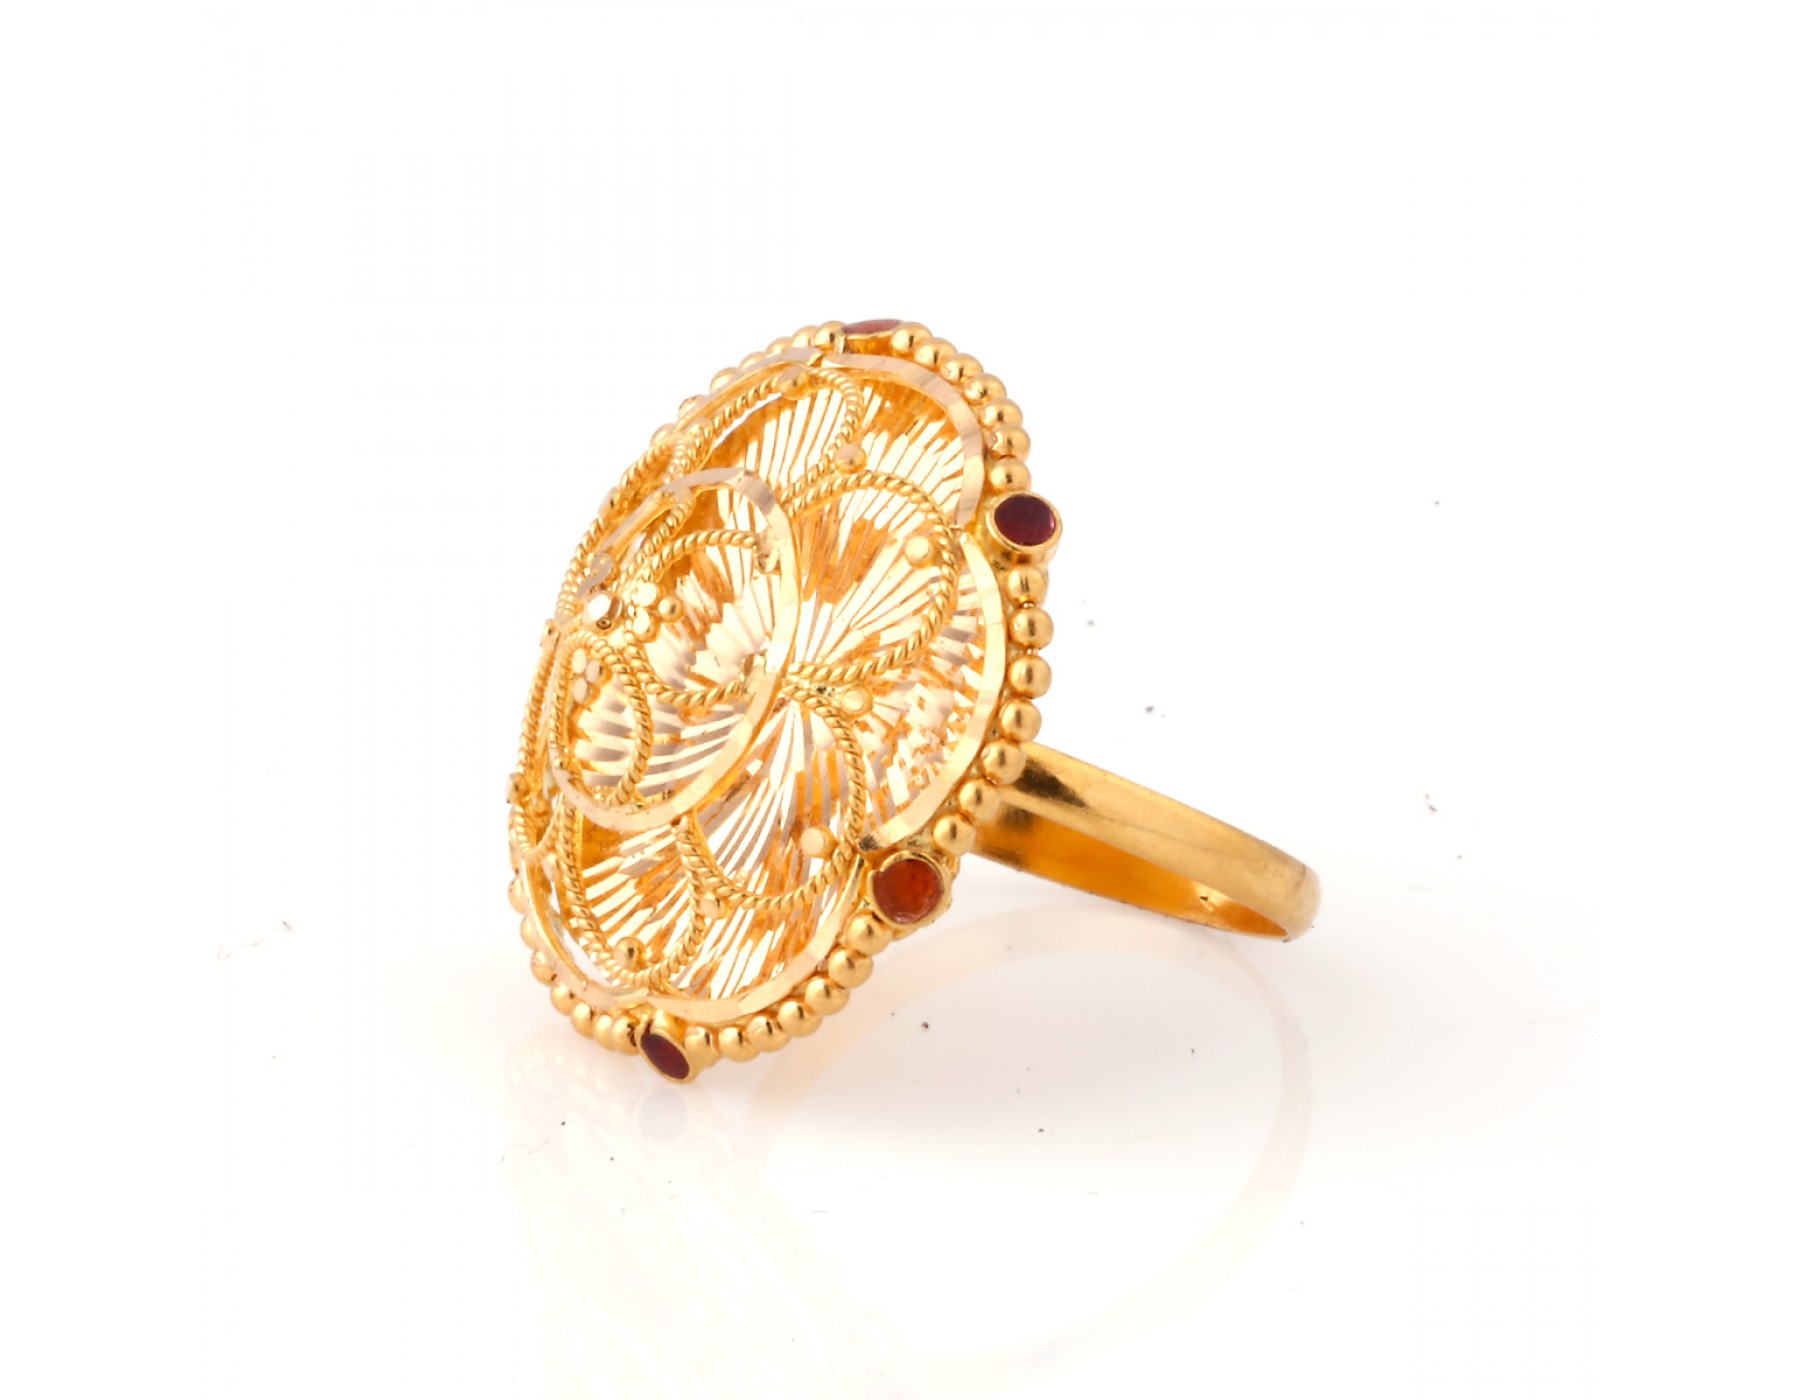 22k Gold Rings | Buy Gold Rings Online In Latest 2019 Designs | Kalyan